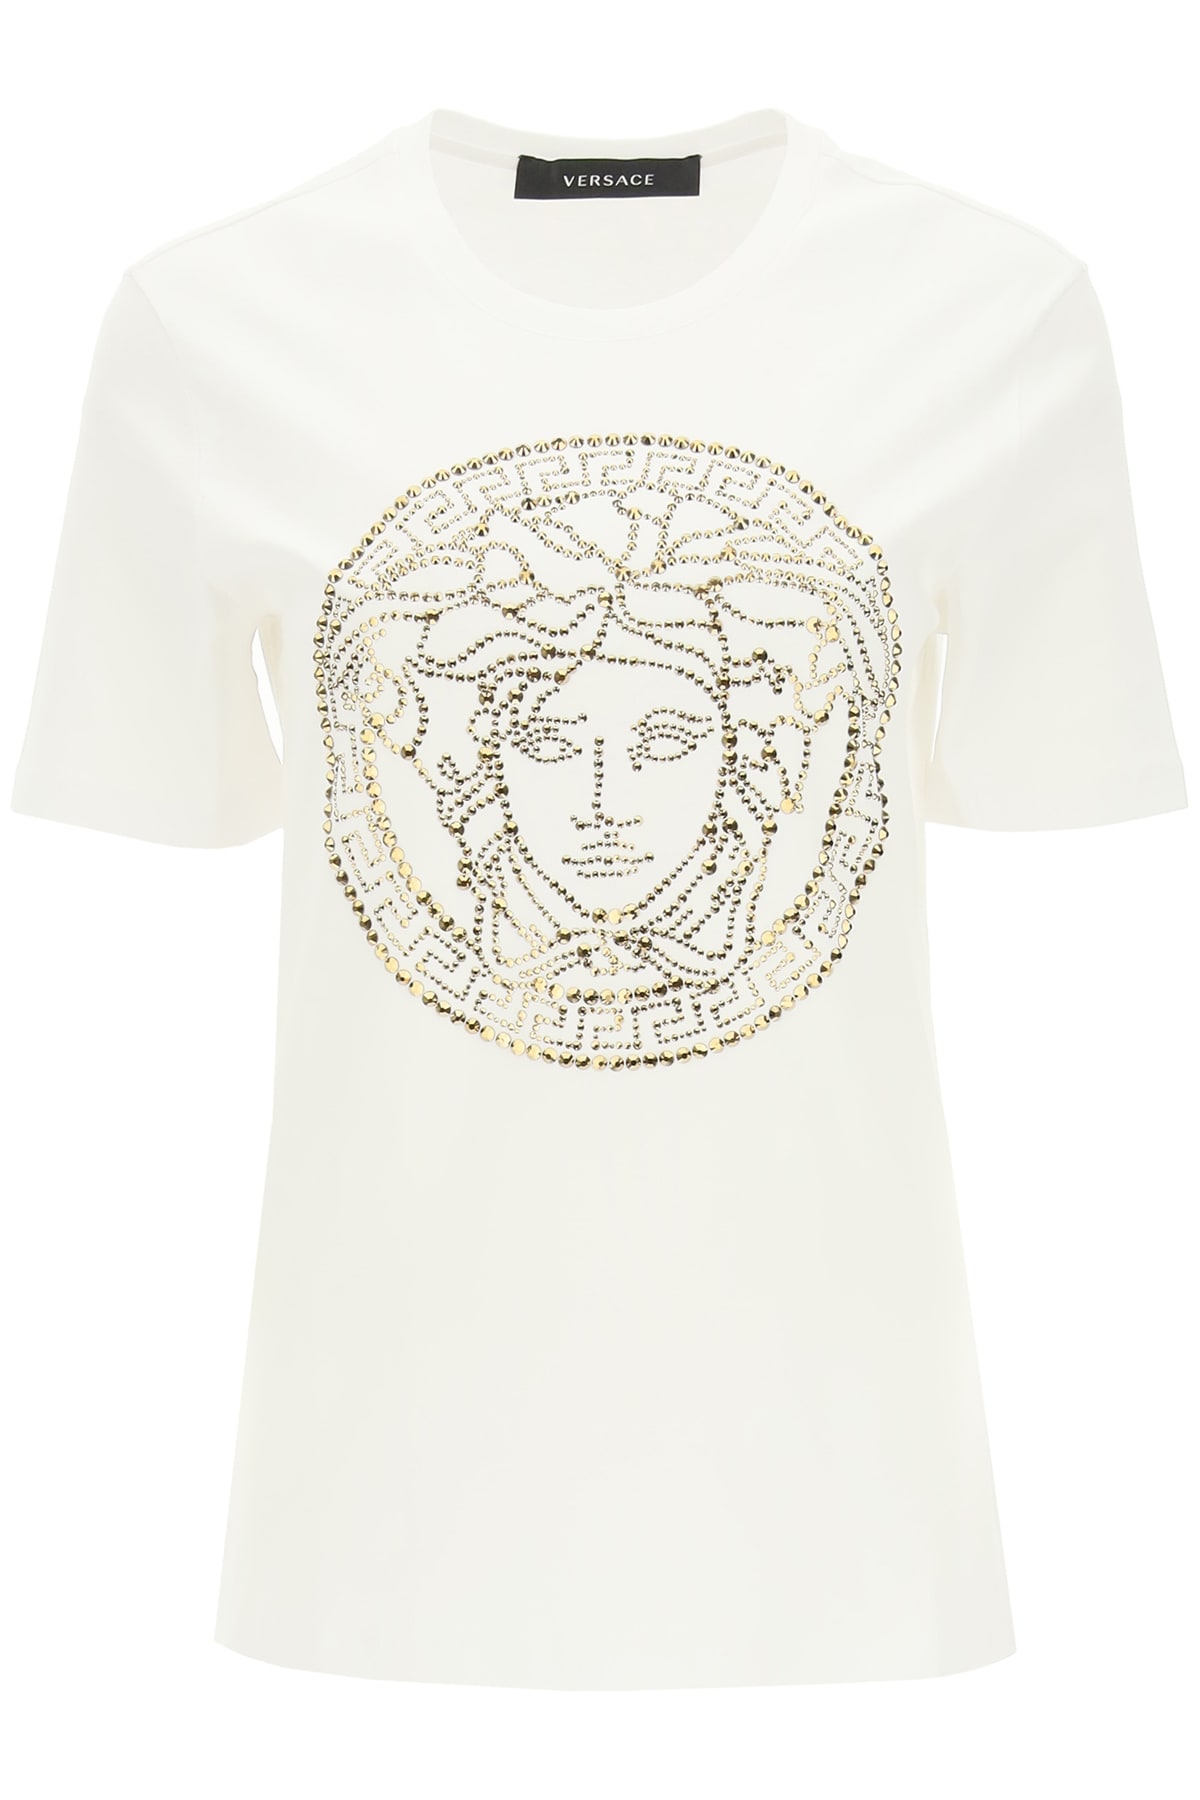 Versace Medusa T-shirt With Studs And Rhinestones